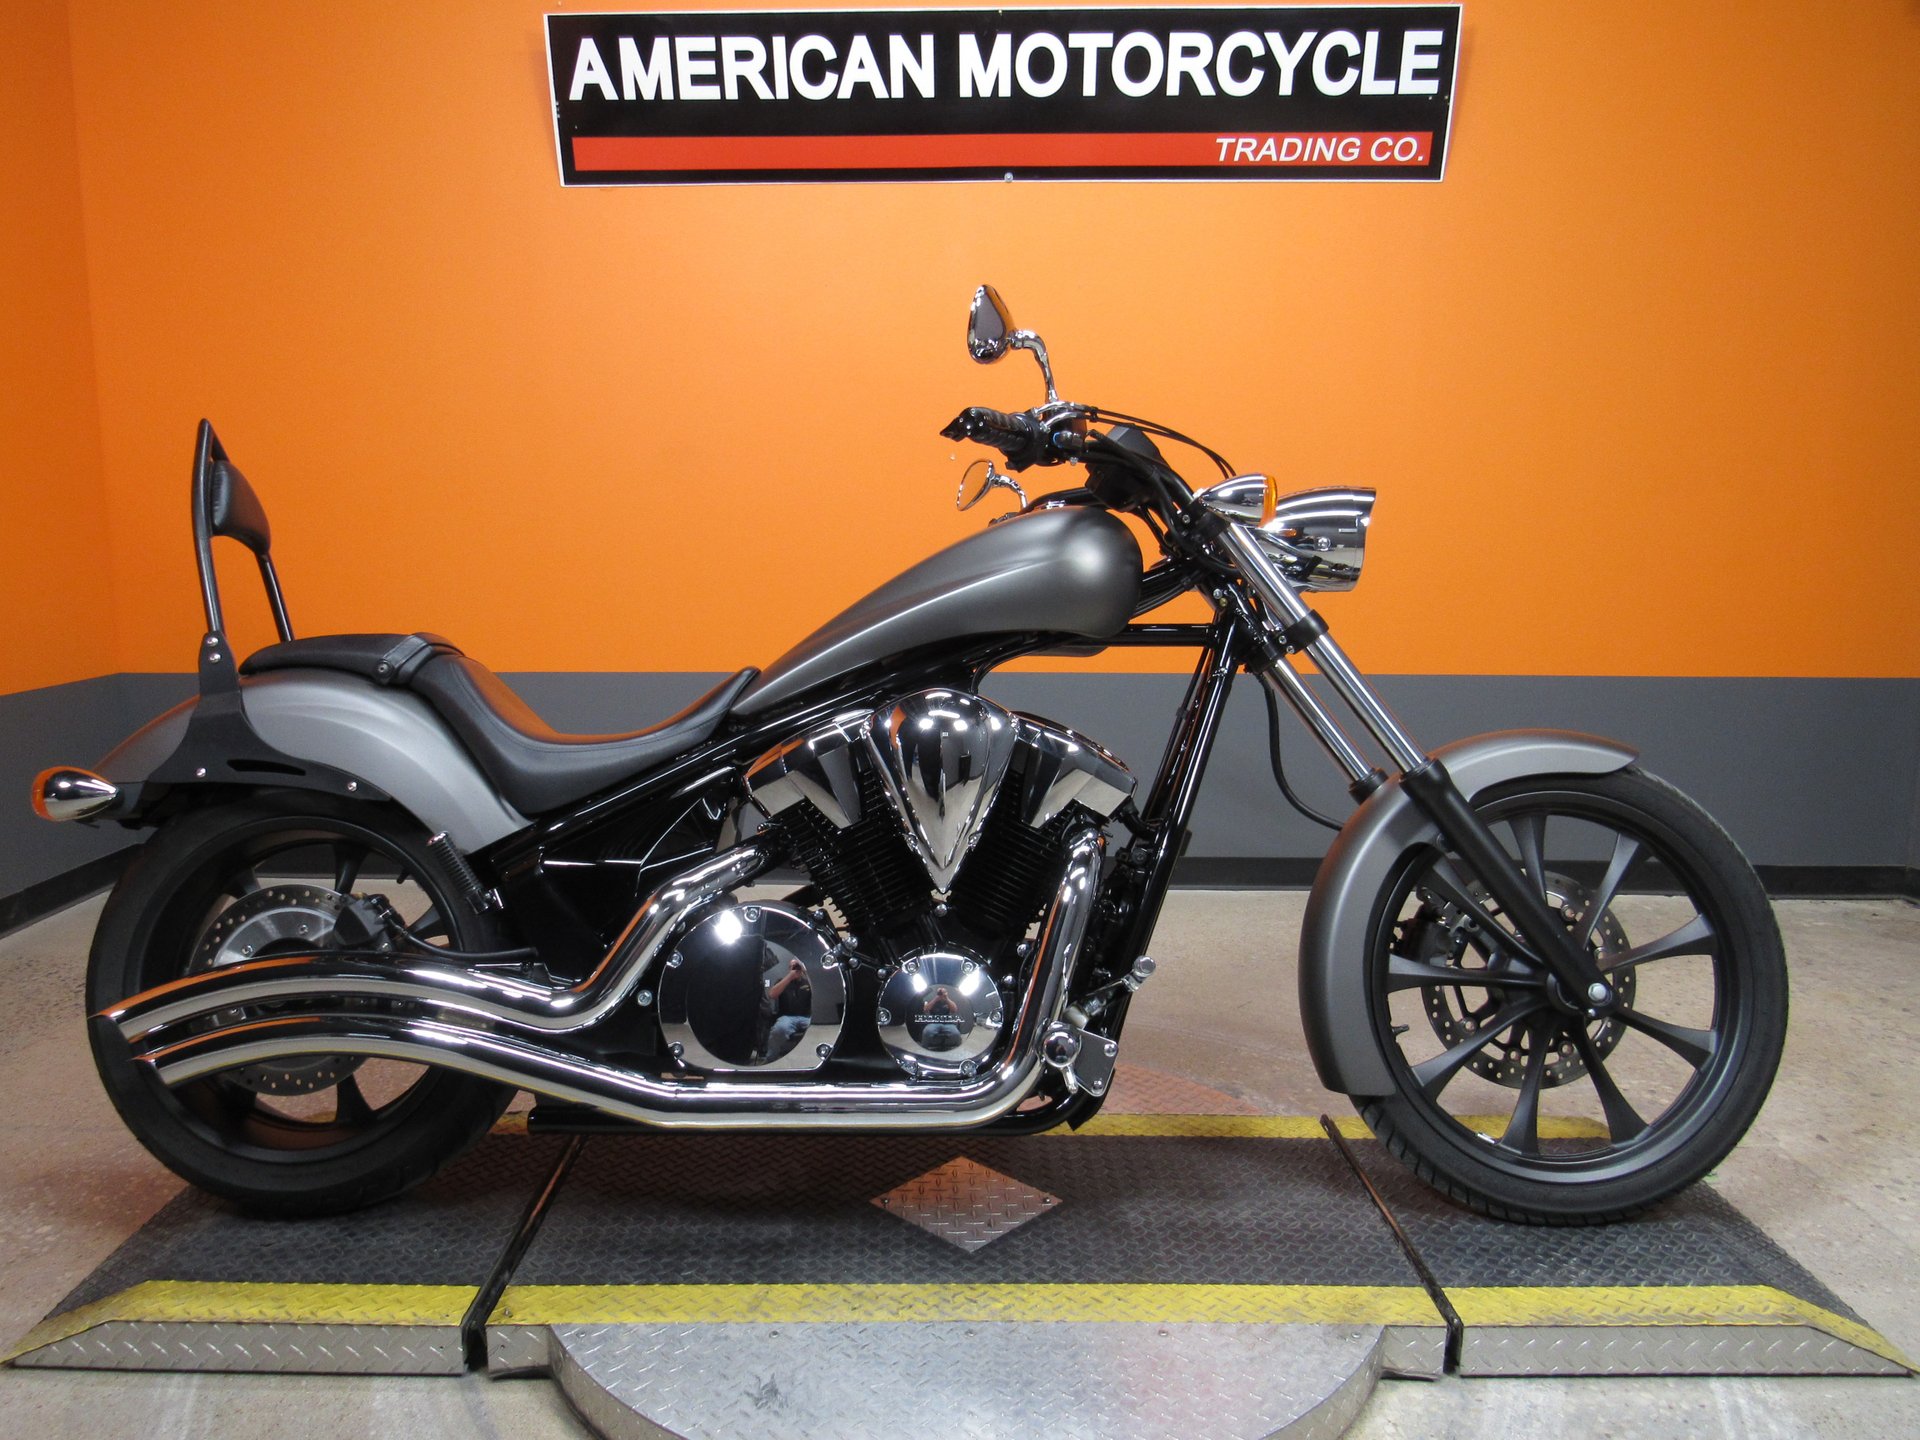 16 Honda Fury American Motorcycle Trading Company Used Harley Davidson Motorcycles